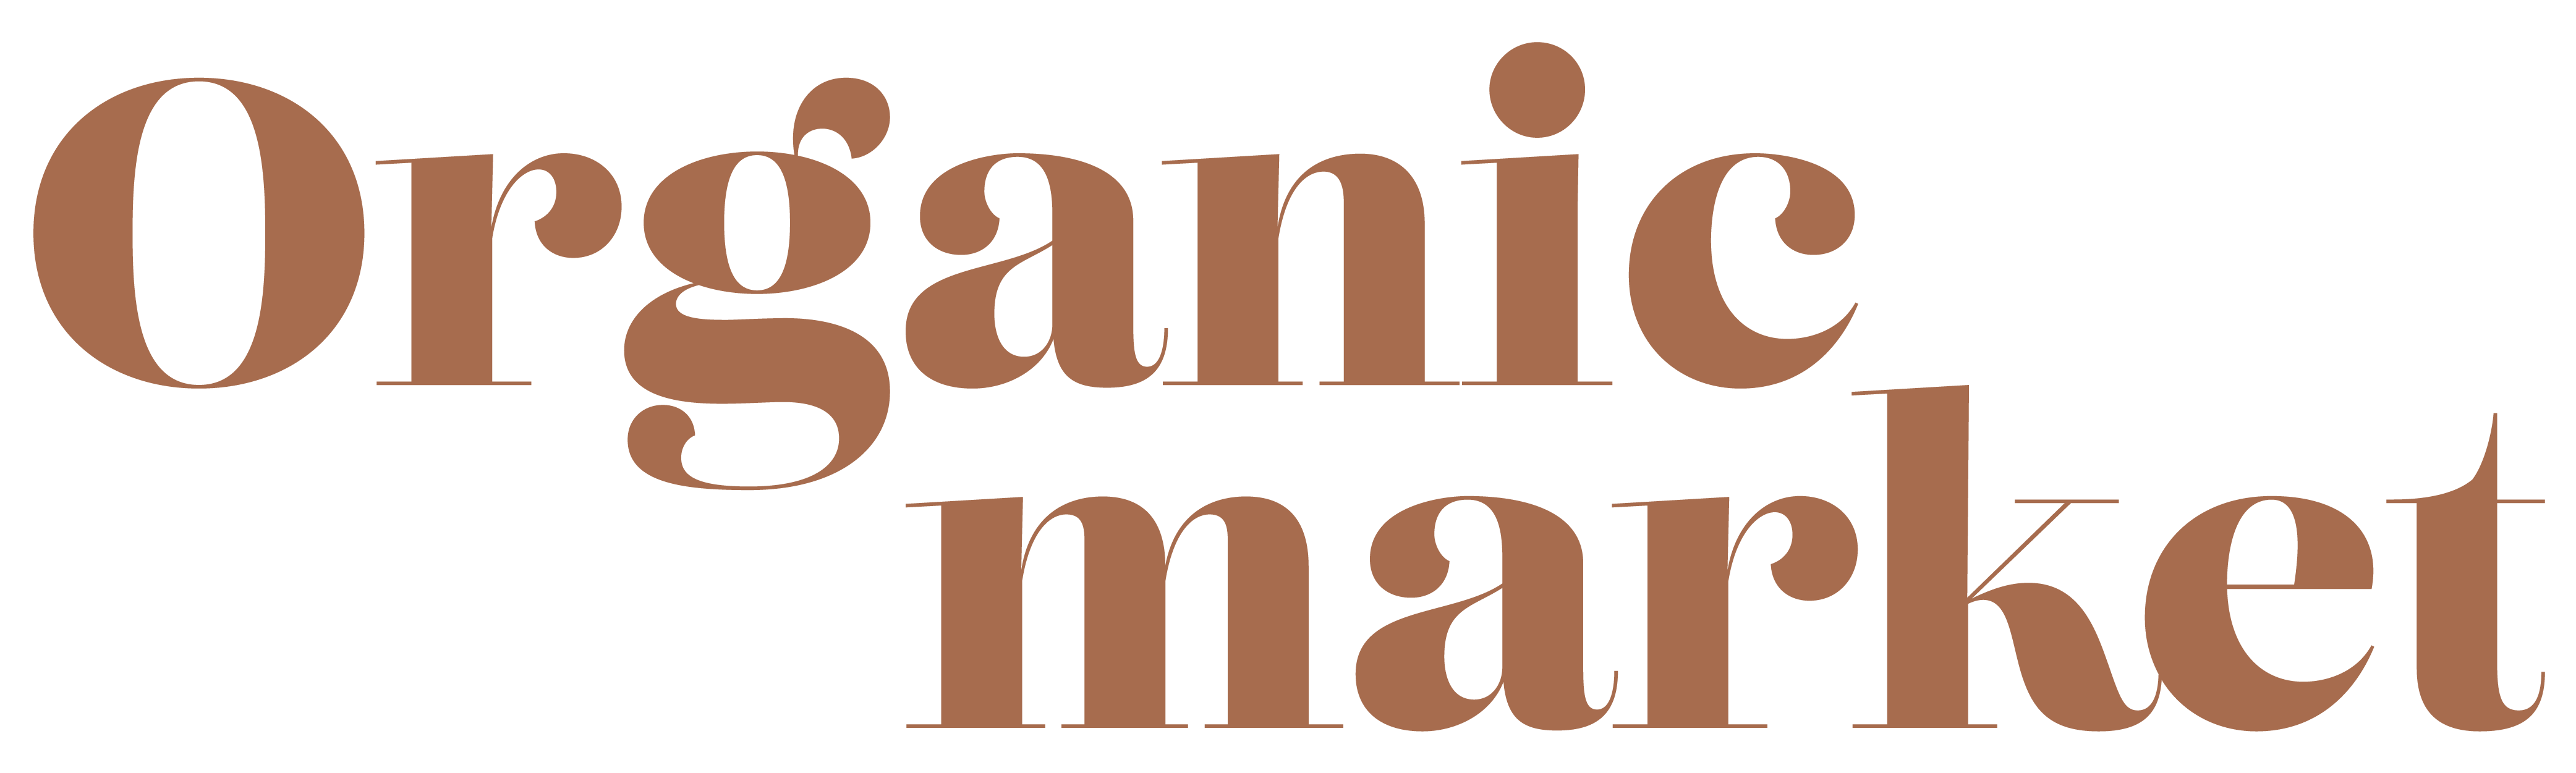 Organic Market logo